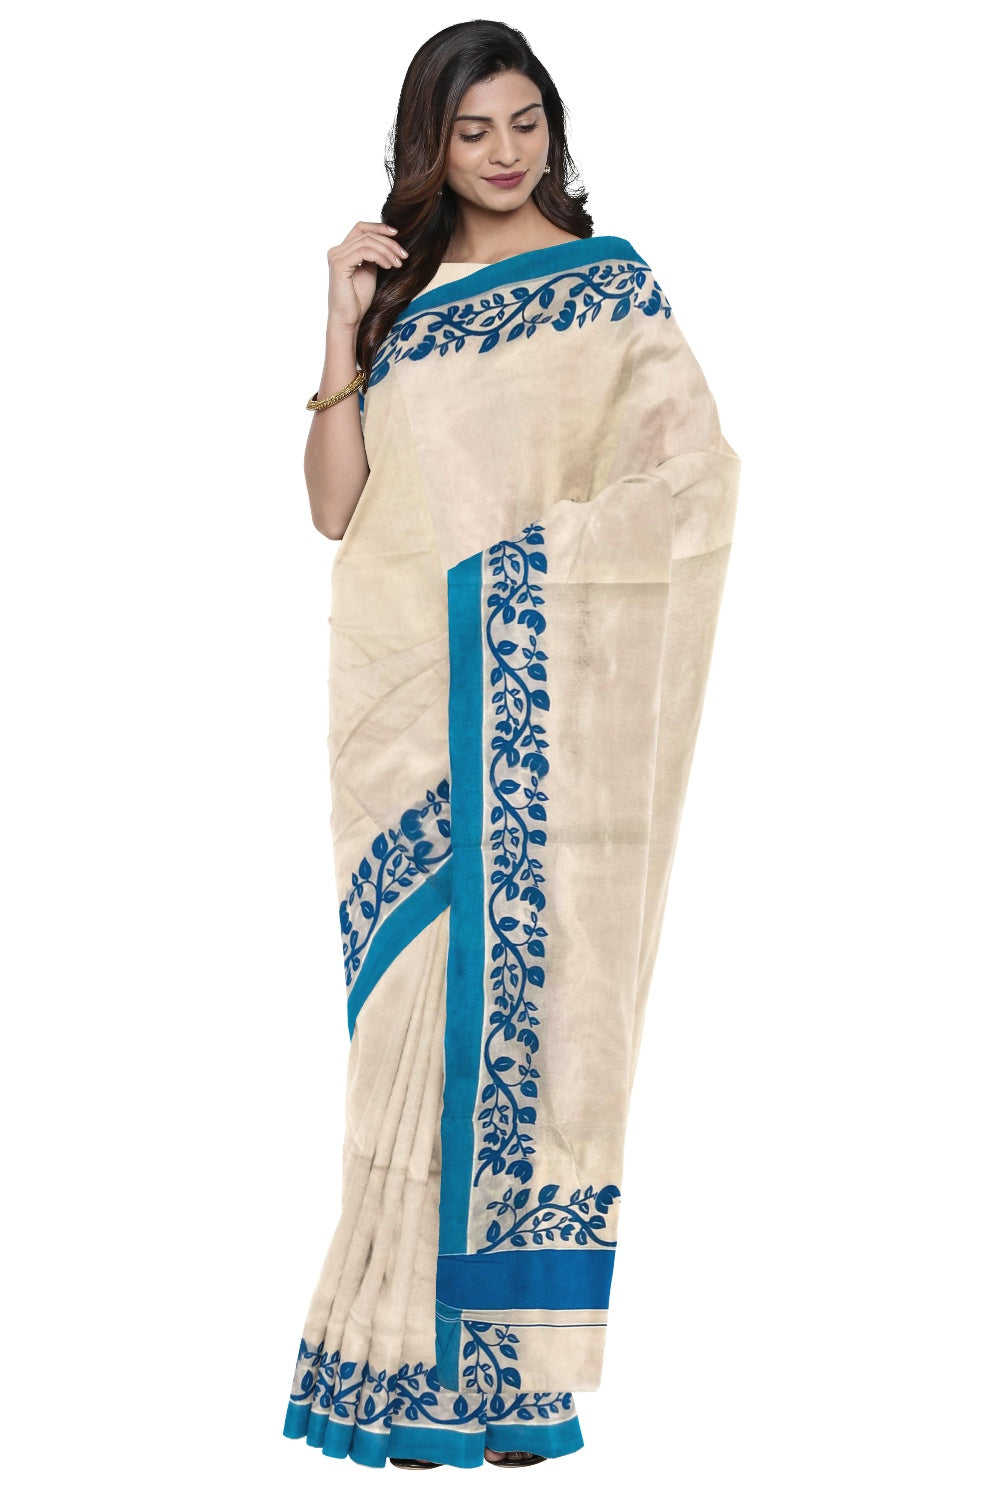 Southloom Original Design Kerala Saree with Blue Floral Vines Block Print